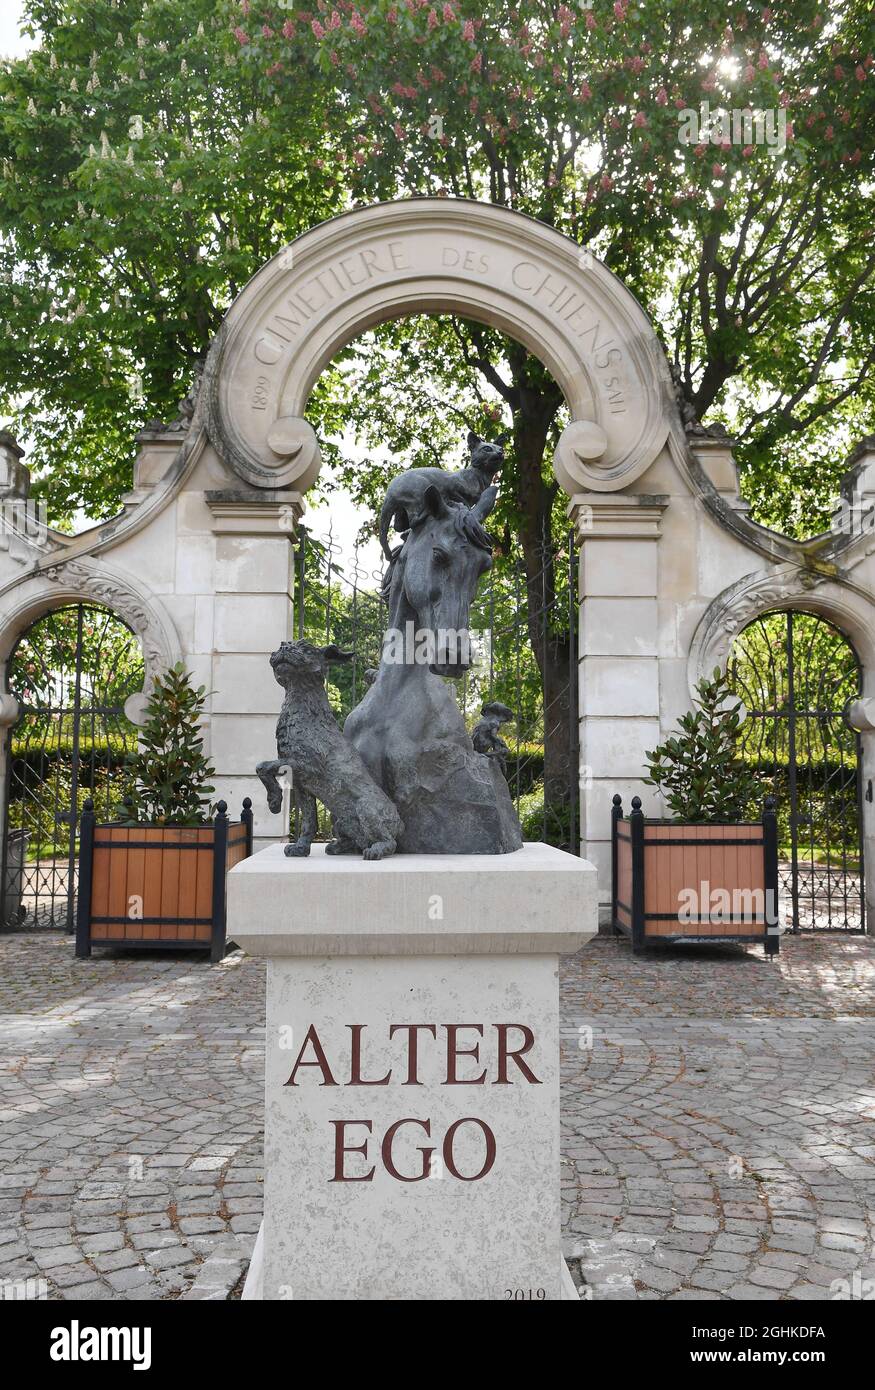 The sculpture 'Alter Ego' by sculptor Arnaud Kasper and the stone entrance  designed by Art Nouveau architect Eugene Petit at the âÂ€Â˜Cimetiere des  ChiensâÂ€Â™ in Asnieres-sur-Seine on the outskirts of Paris, France